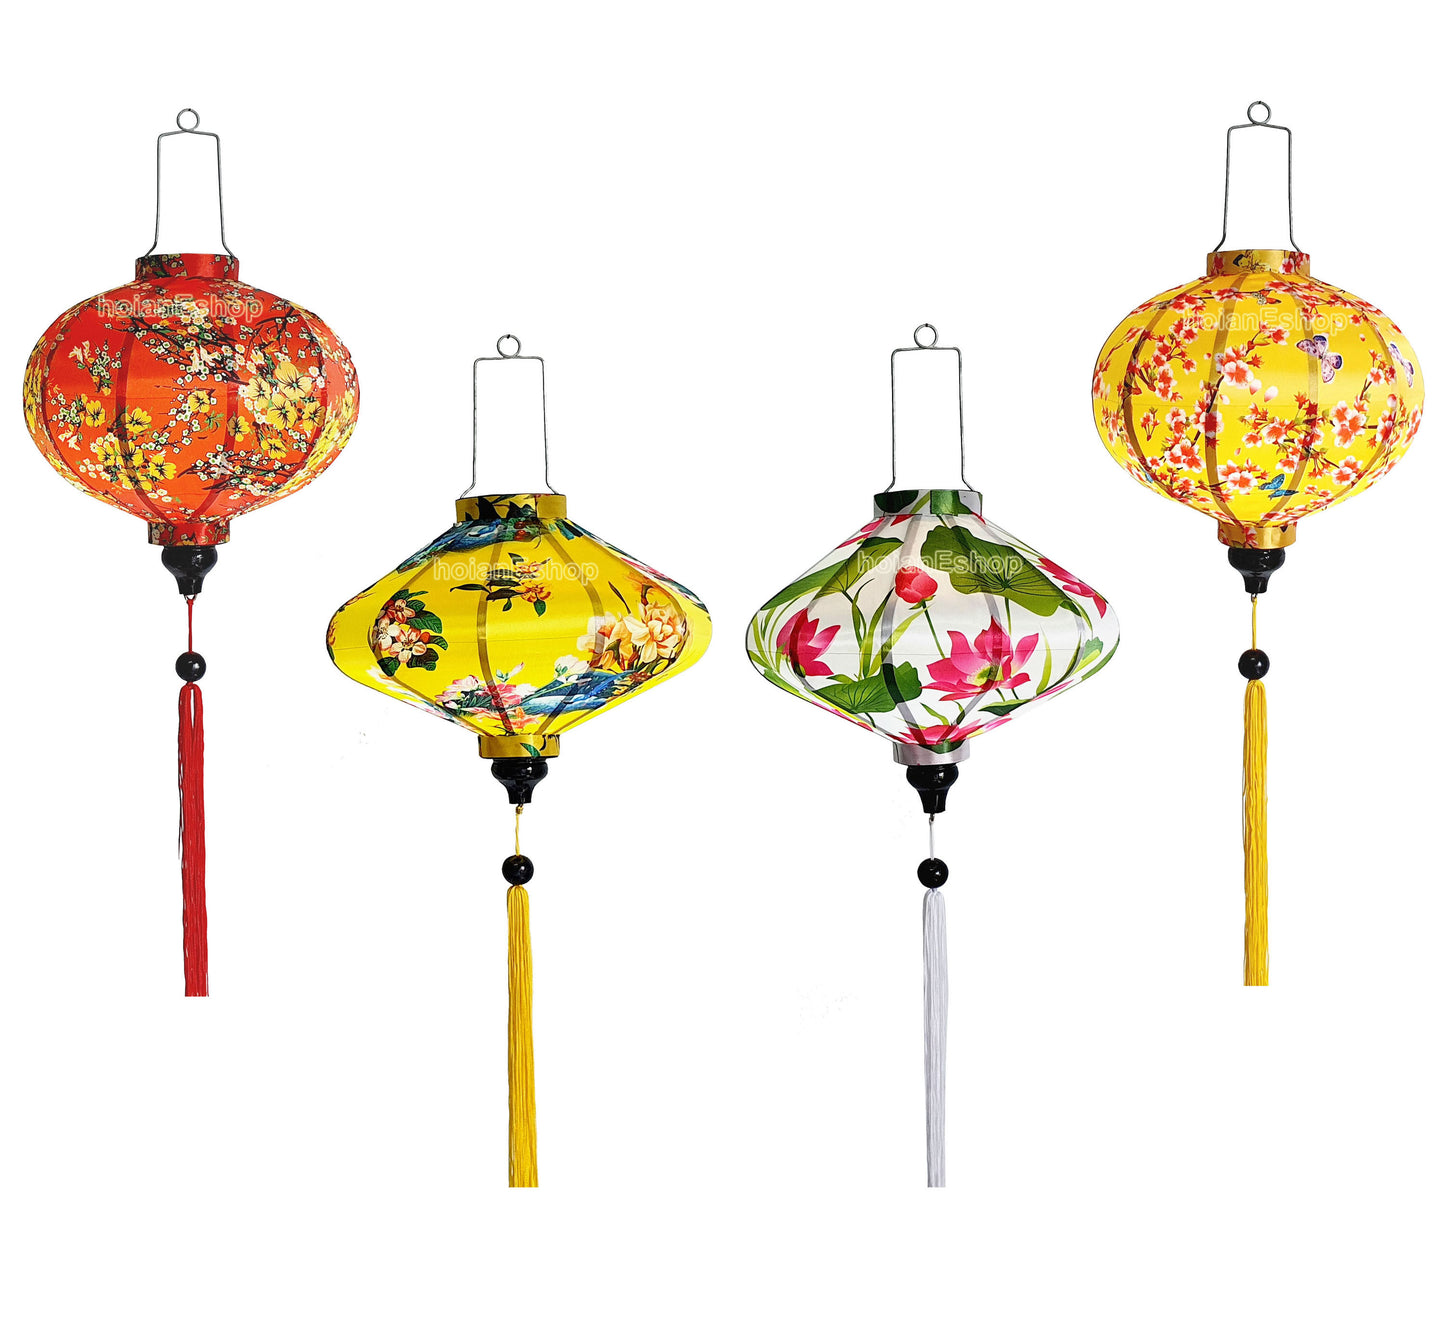 Set 4 silk lanterns for wedding party decor - garden decor - Lantern for patio hanging - Lunar New Year decorations - Christmas decor